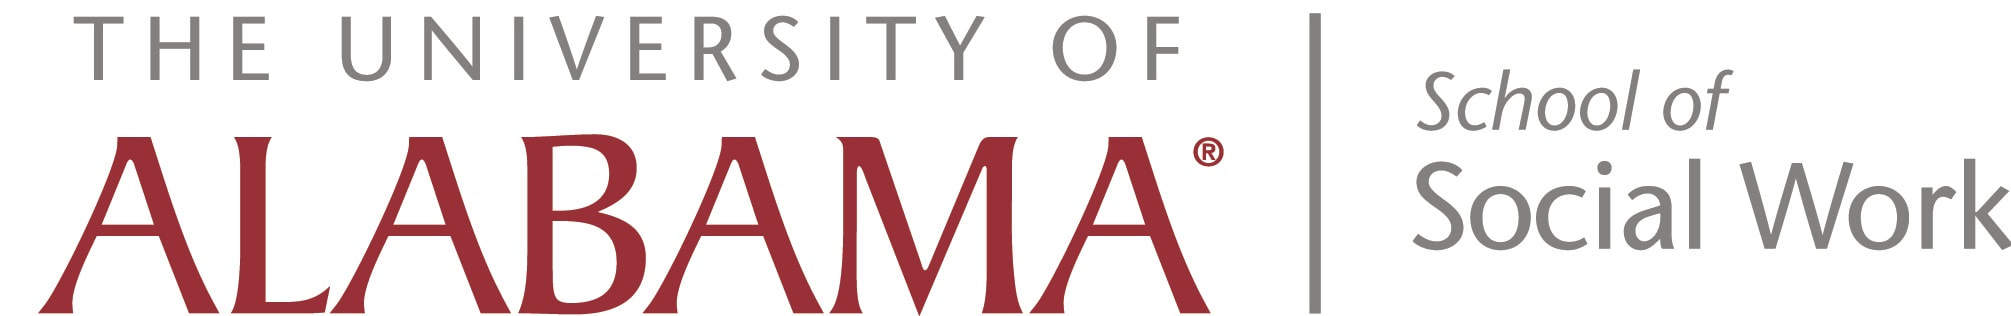 University of Alabama School of Social Work Logo